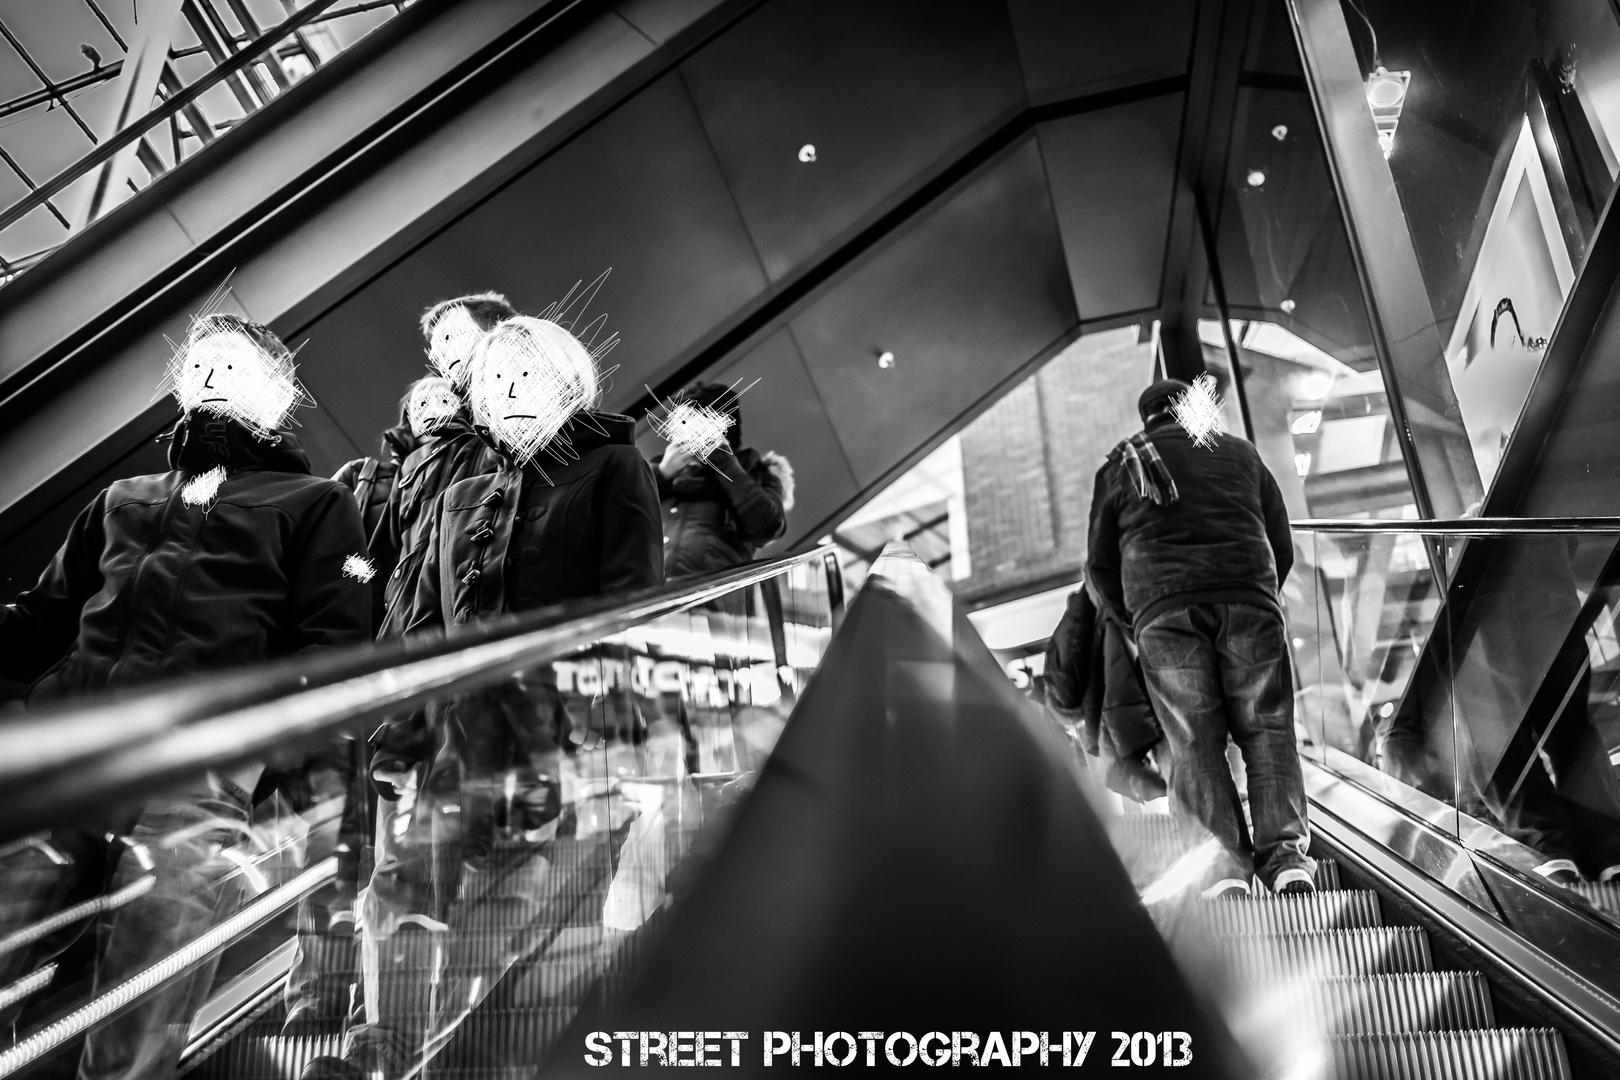 Street Photography 2013